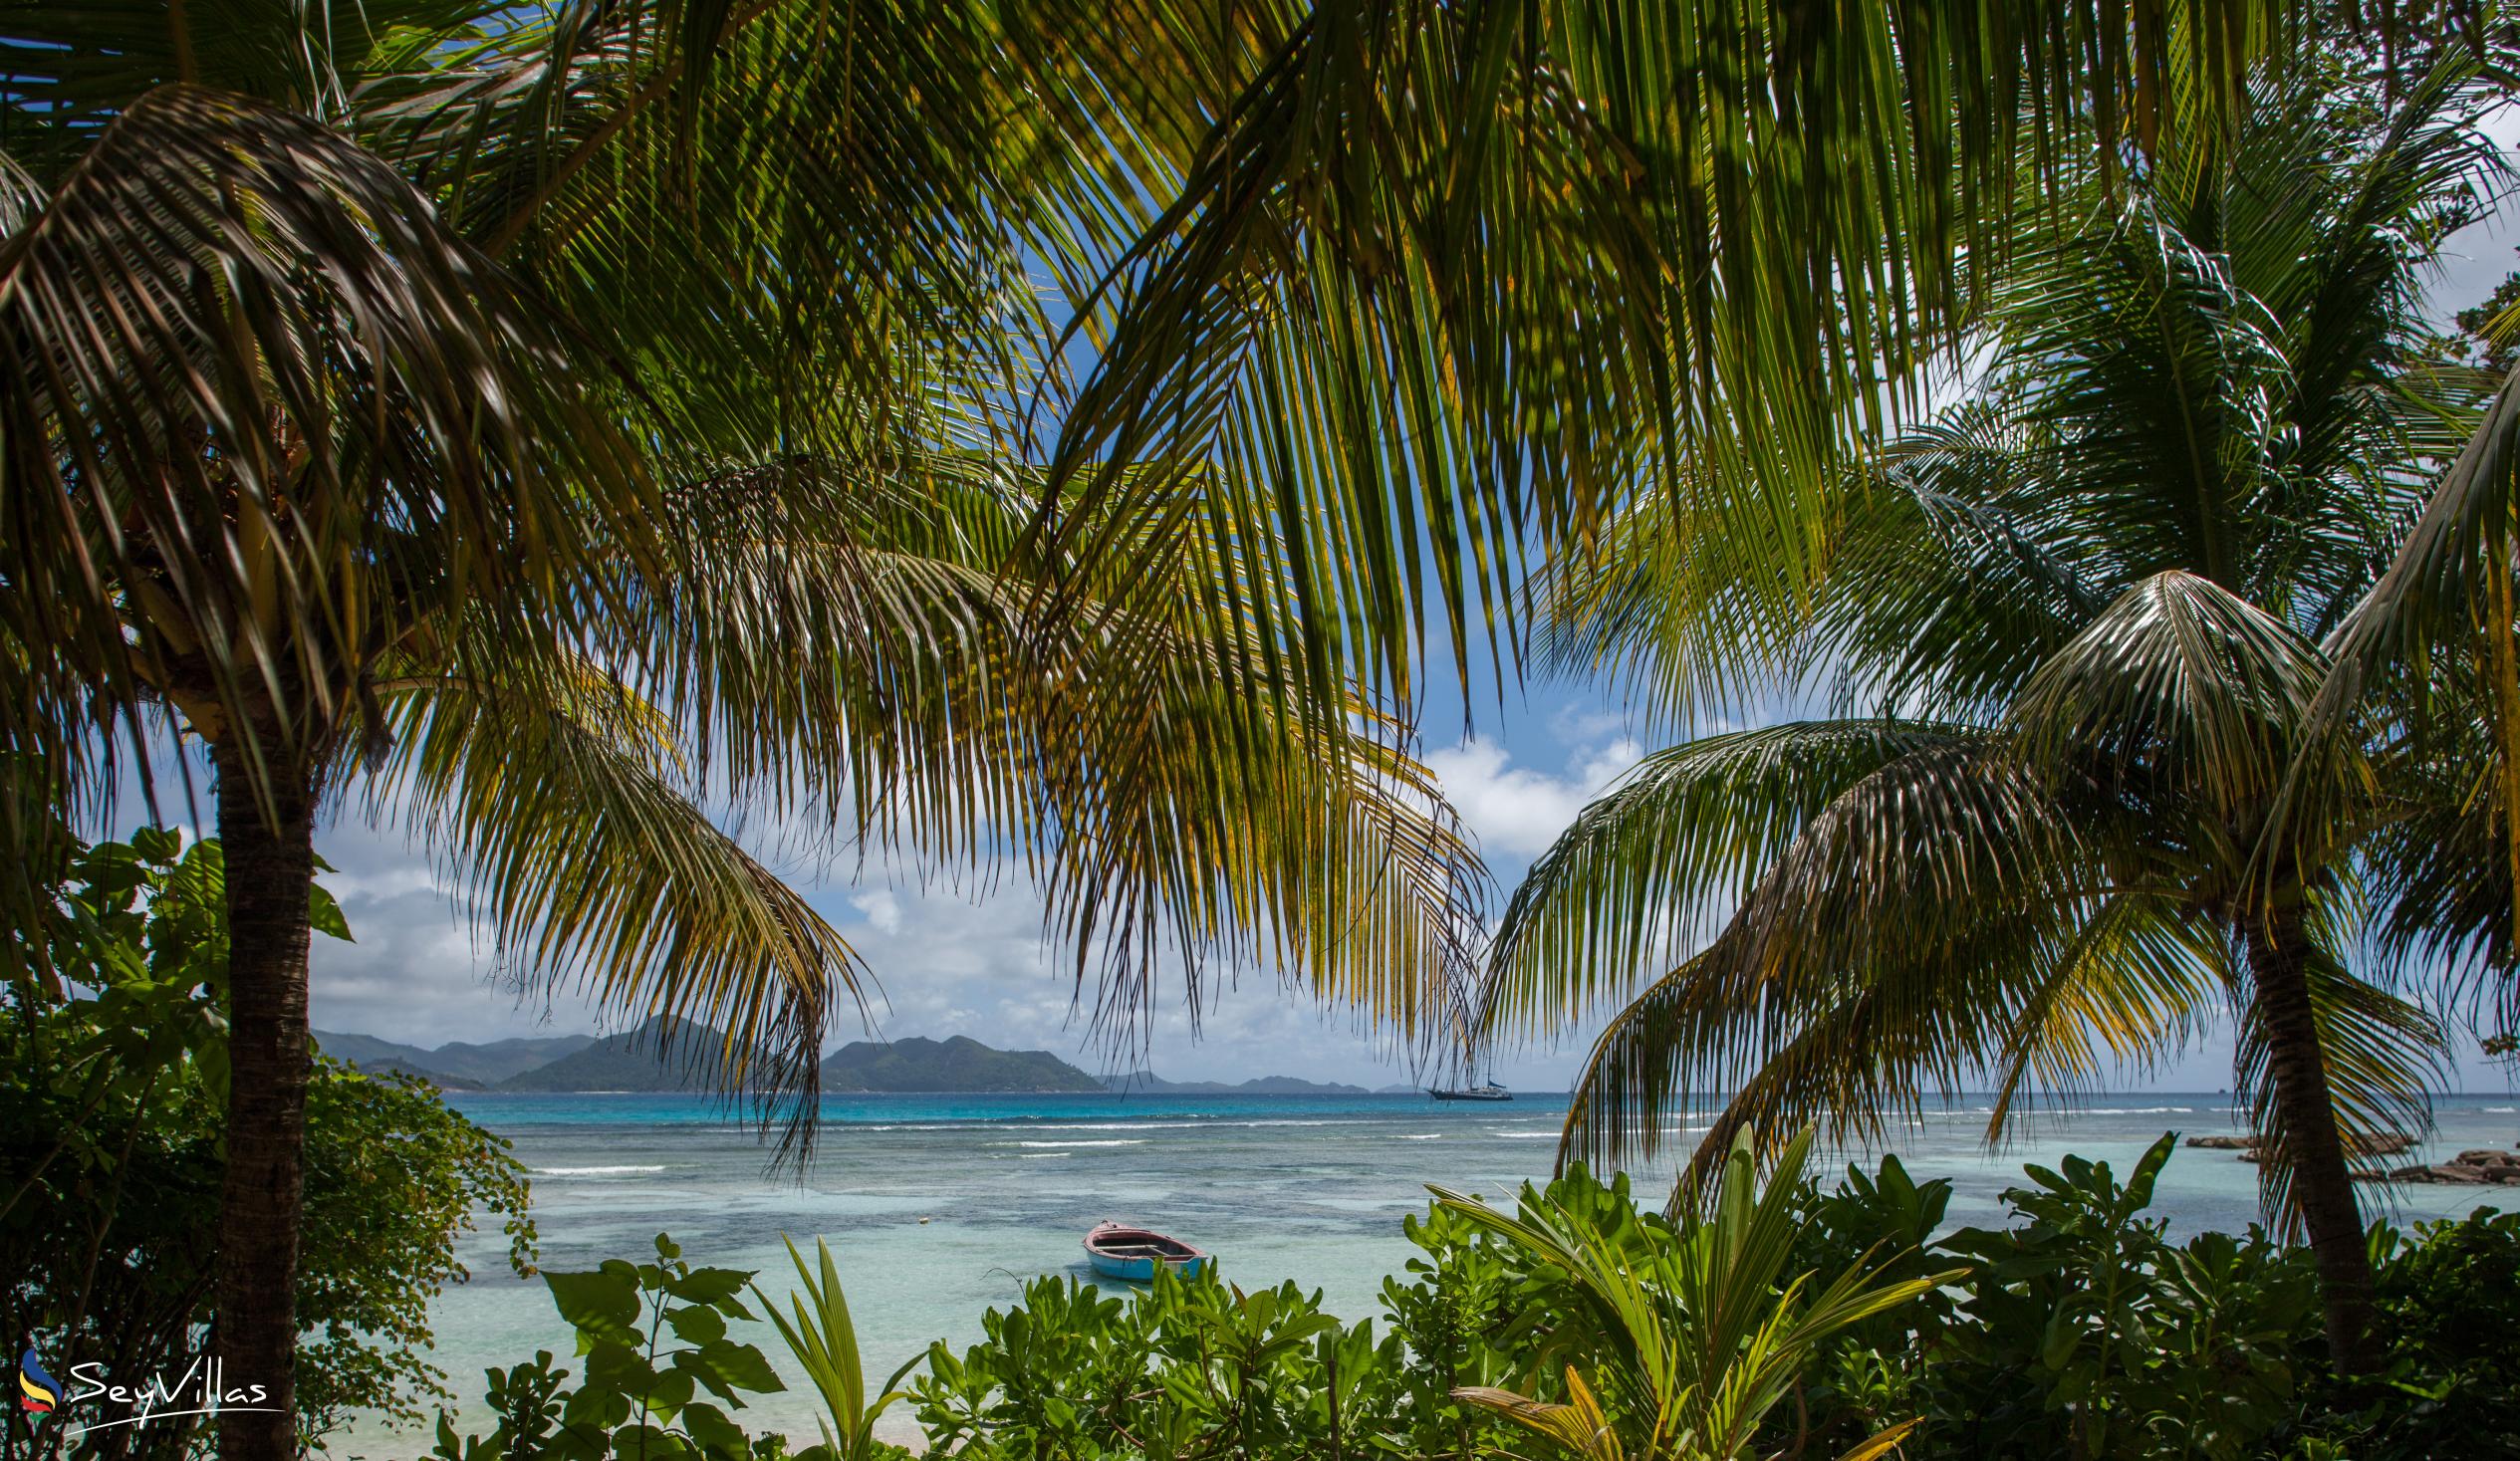 Foto 23: Moonlight Beach Villa - Posizione - La Digue (Seychelles)